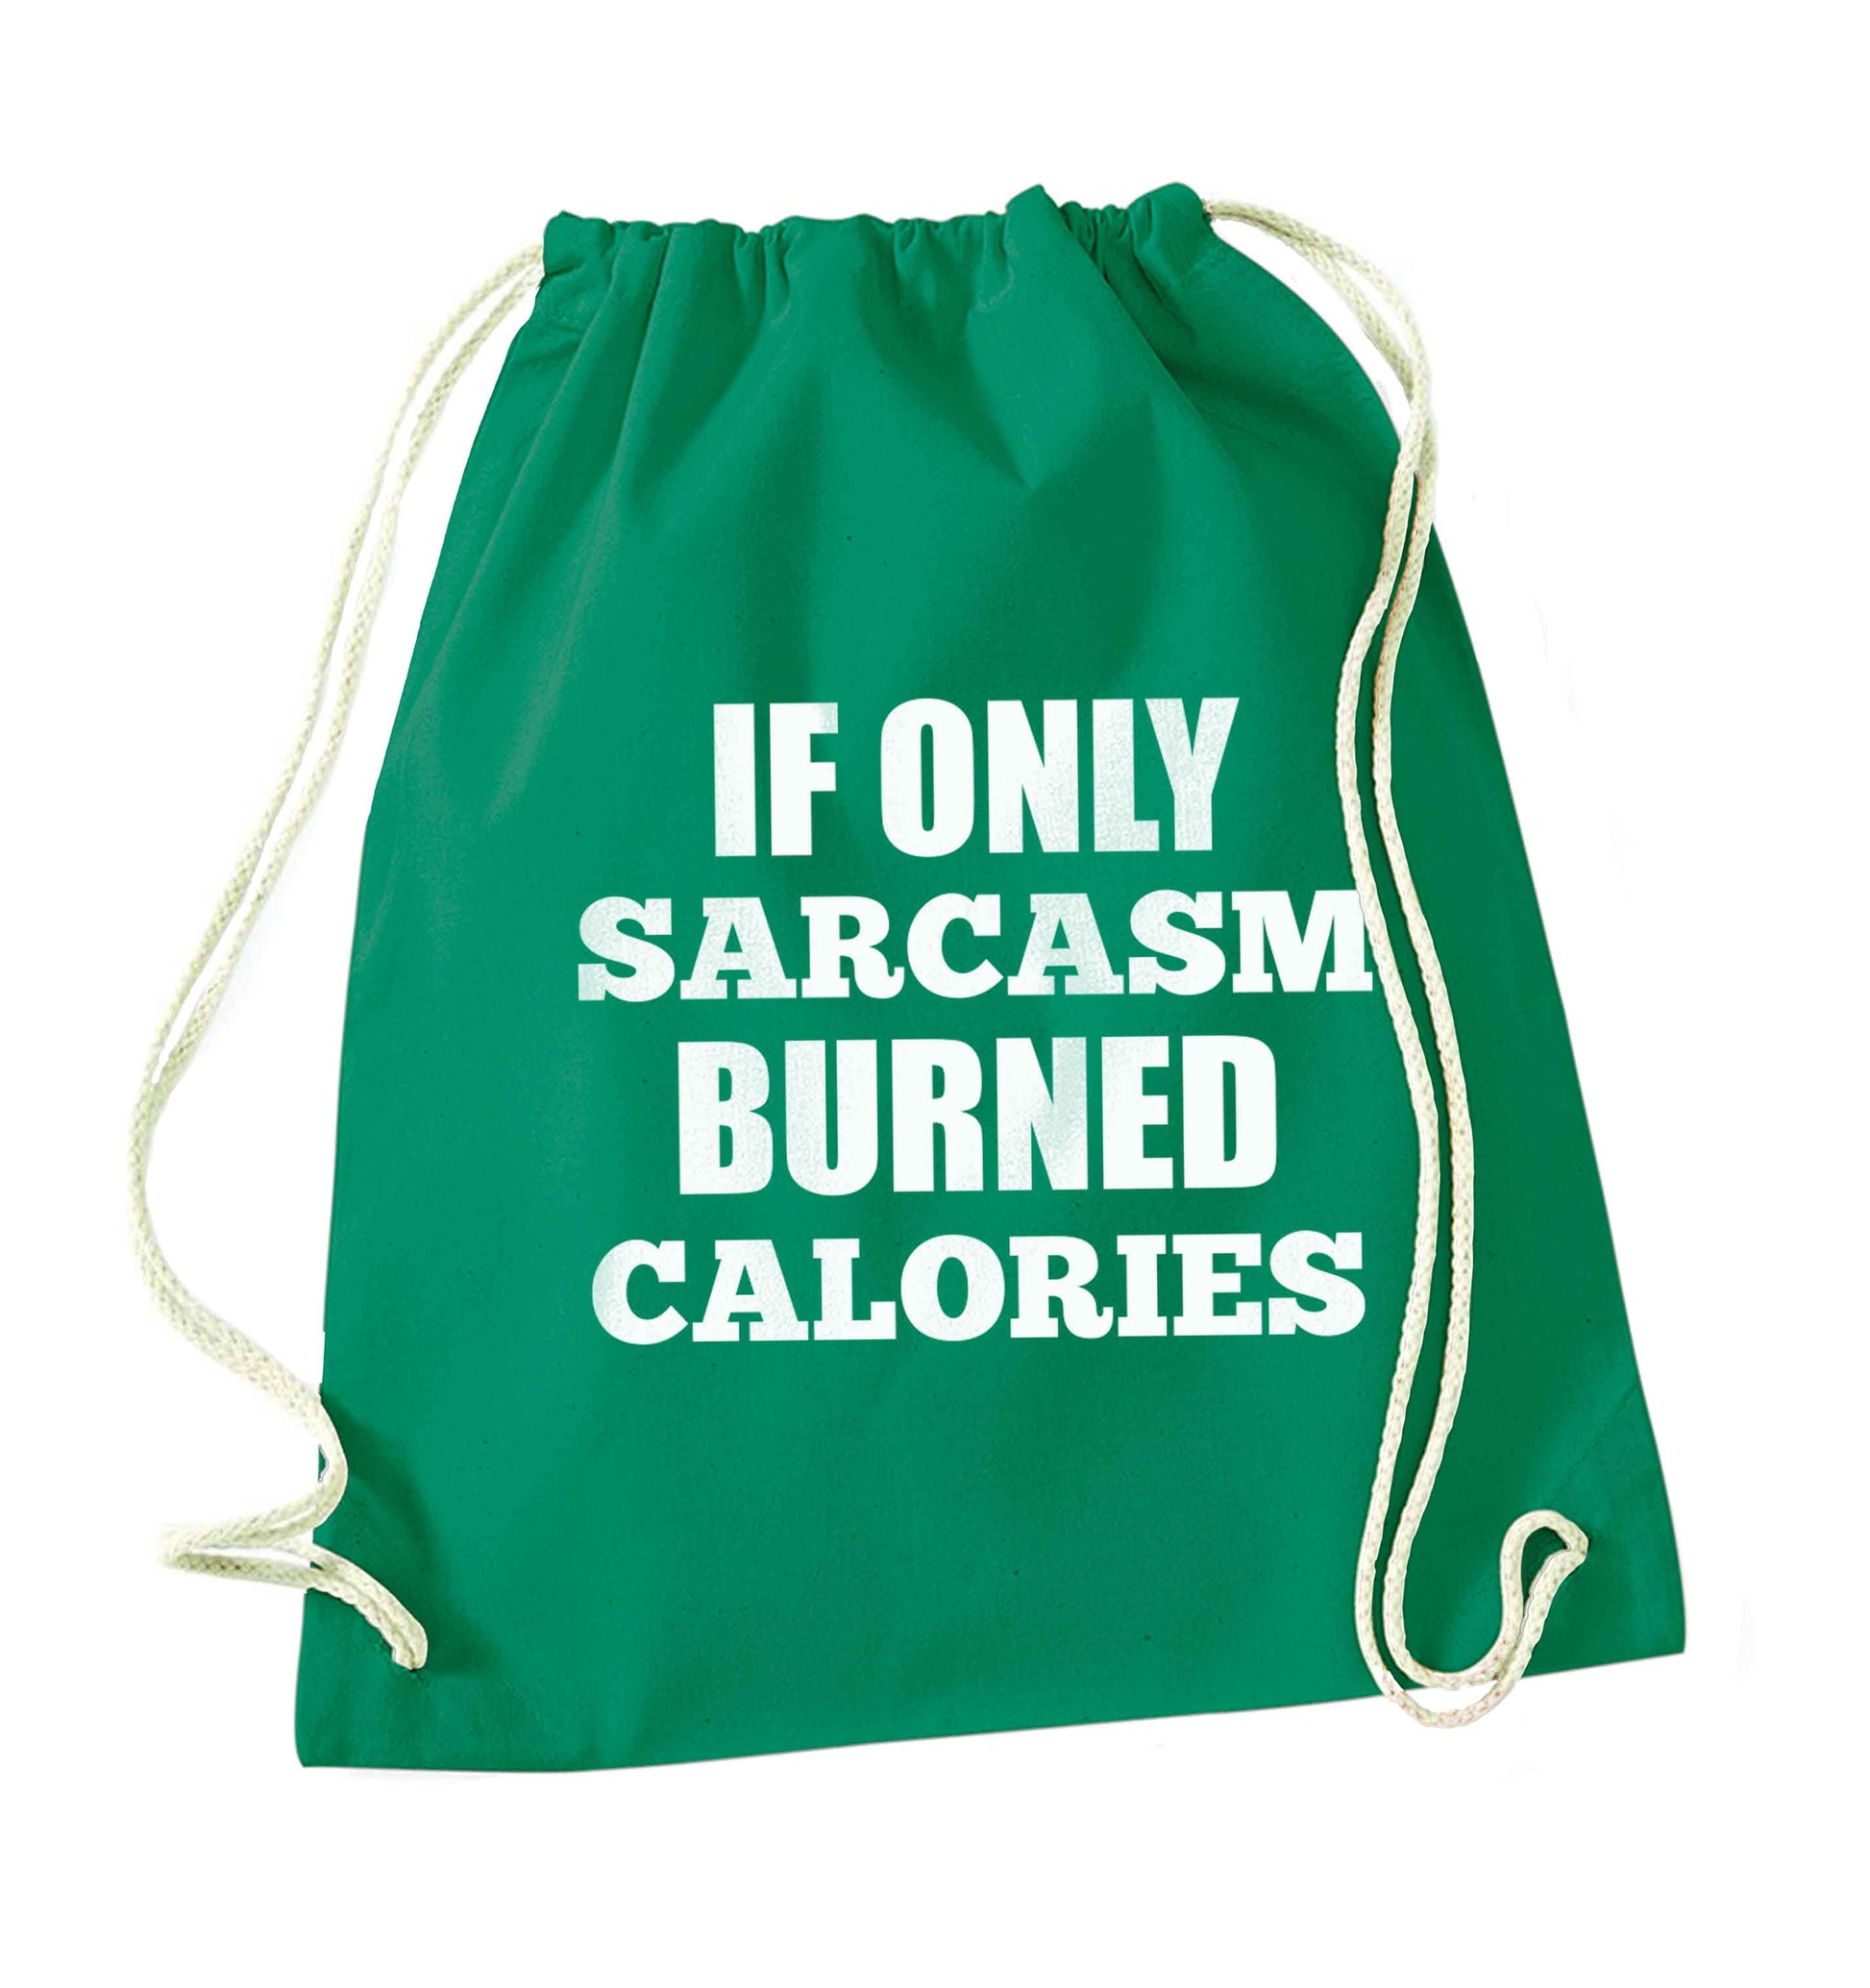 If only sarcasm burned calories green drawstring bag